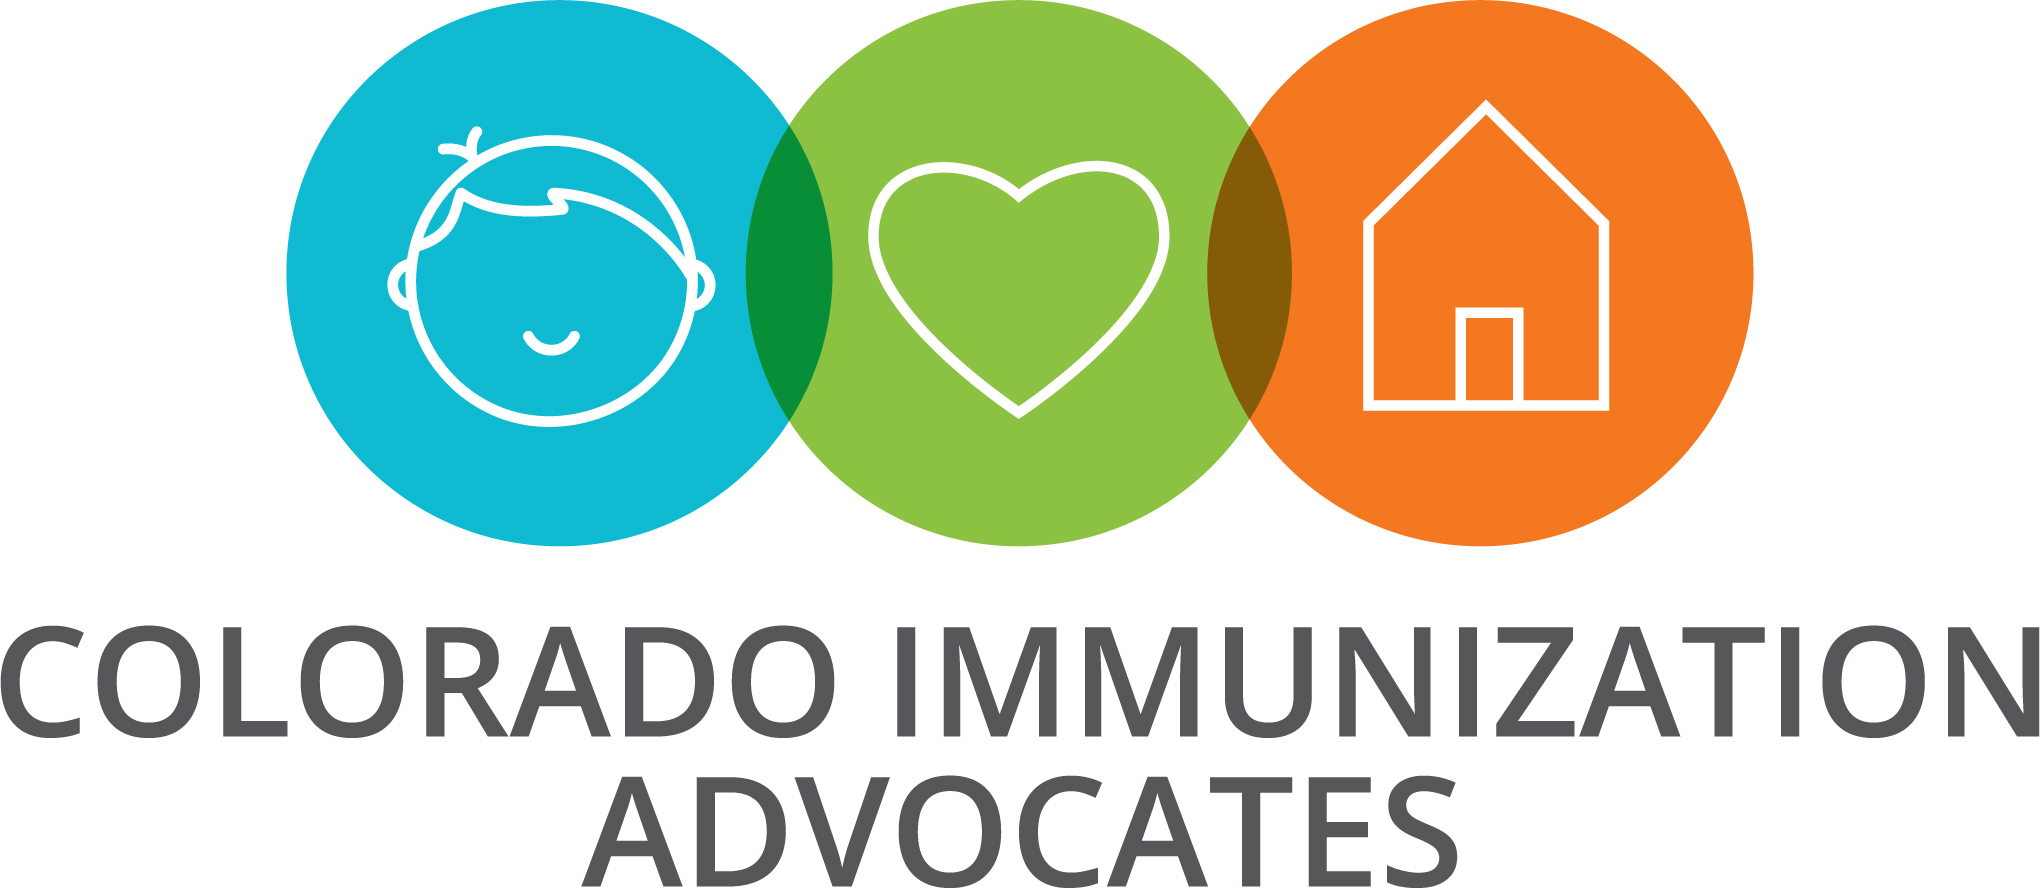 Colorado Immunization Advocates logo